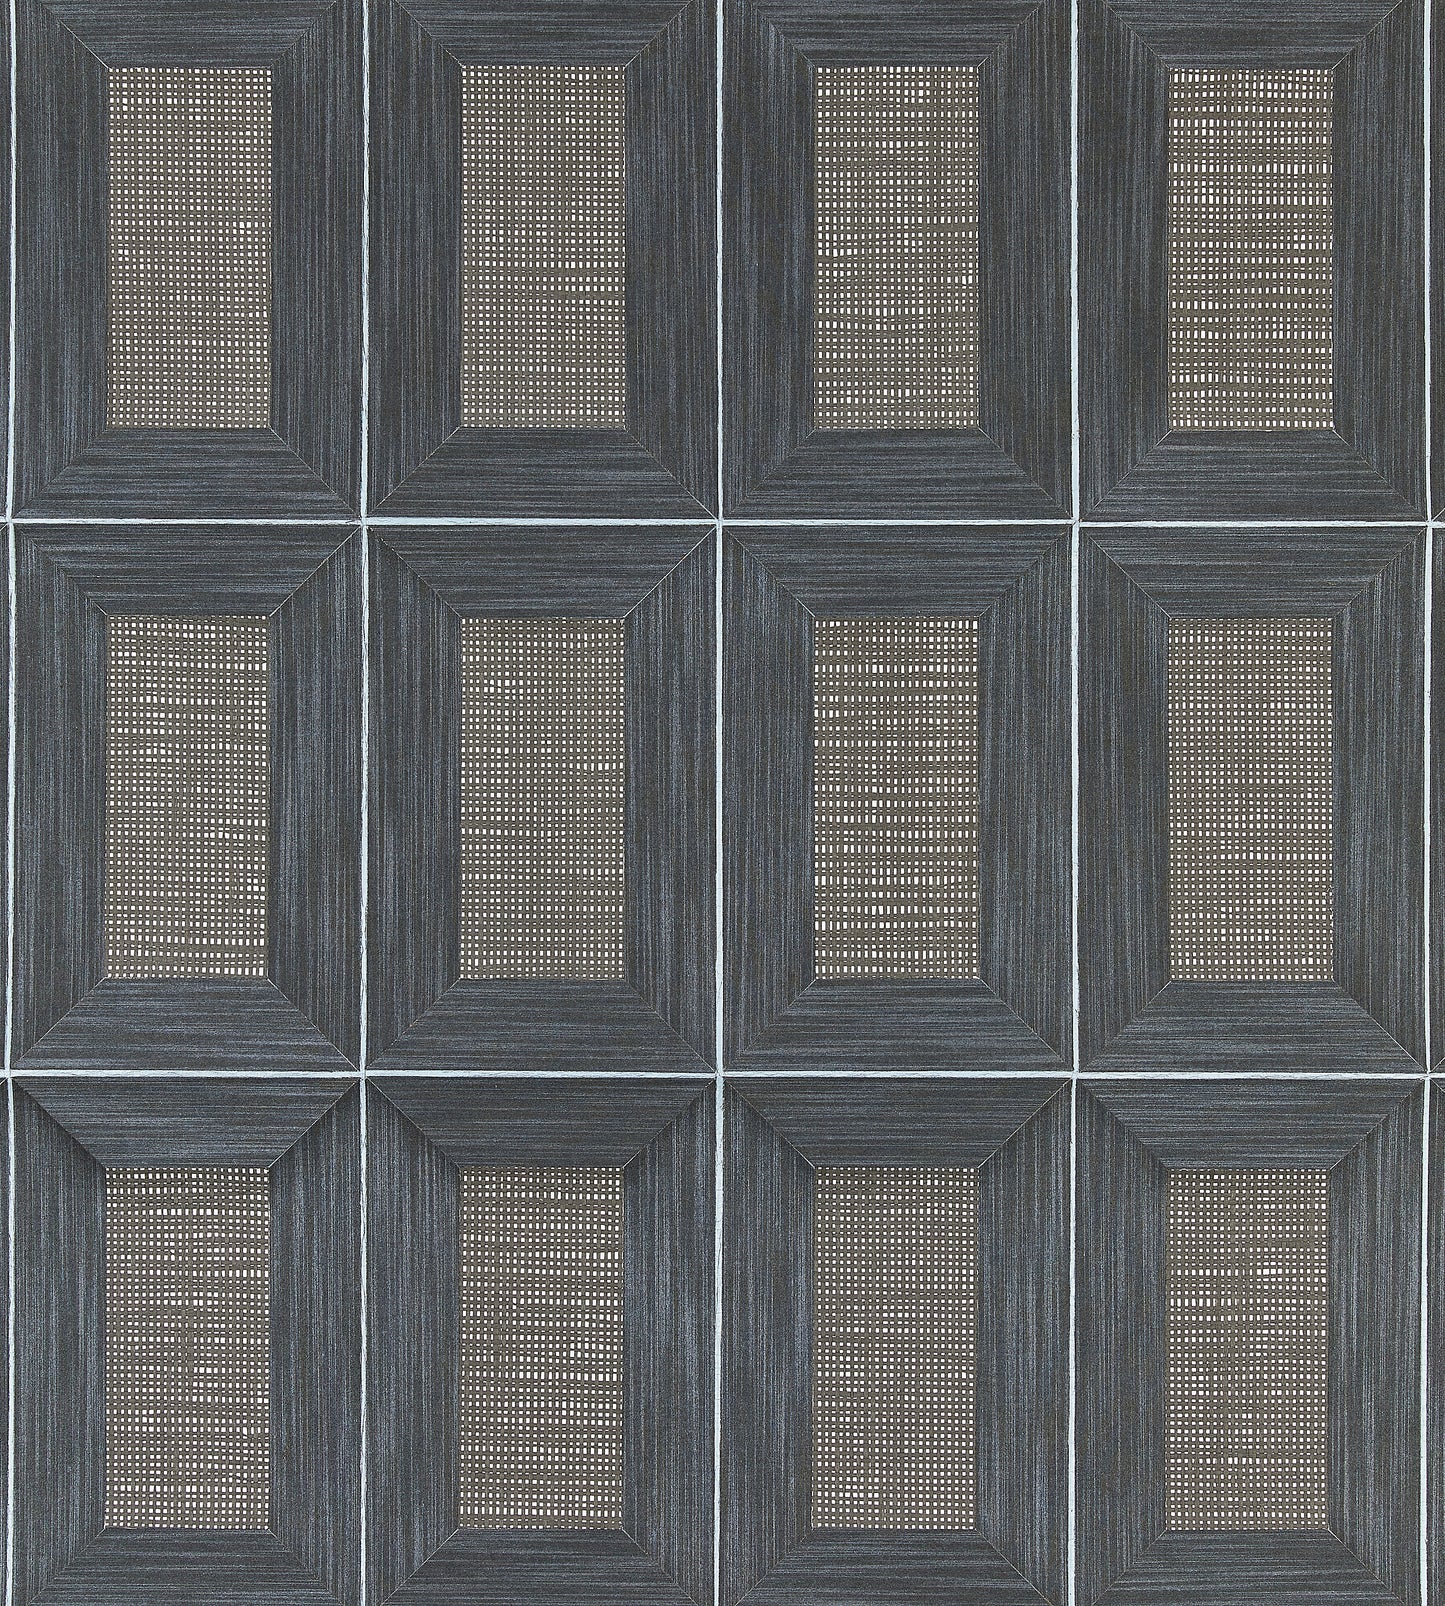 Buy Scalamandre Wallpaper Pattern Sc 0005Wp88474 Name Libro - Woven Wrought Iron Geometric|Plaid Wallpaper